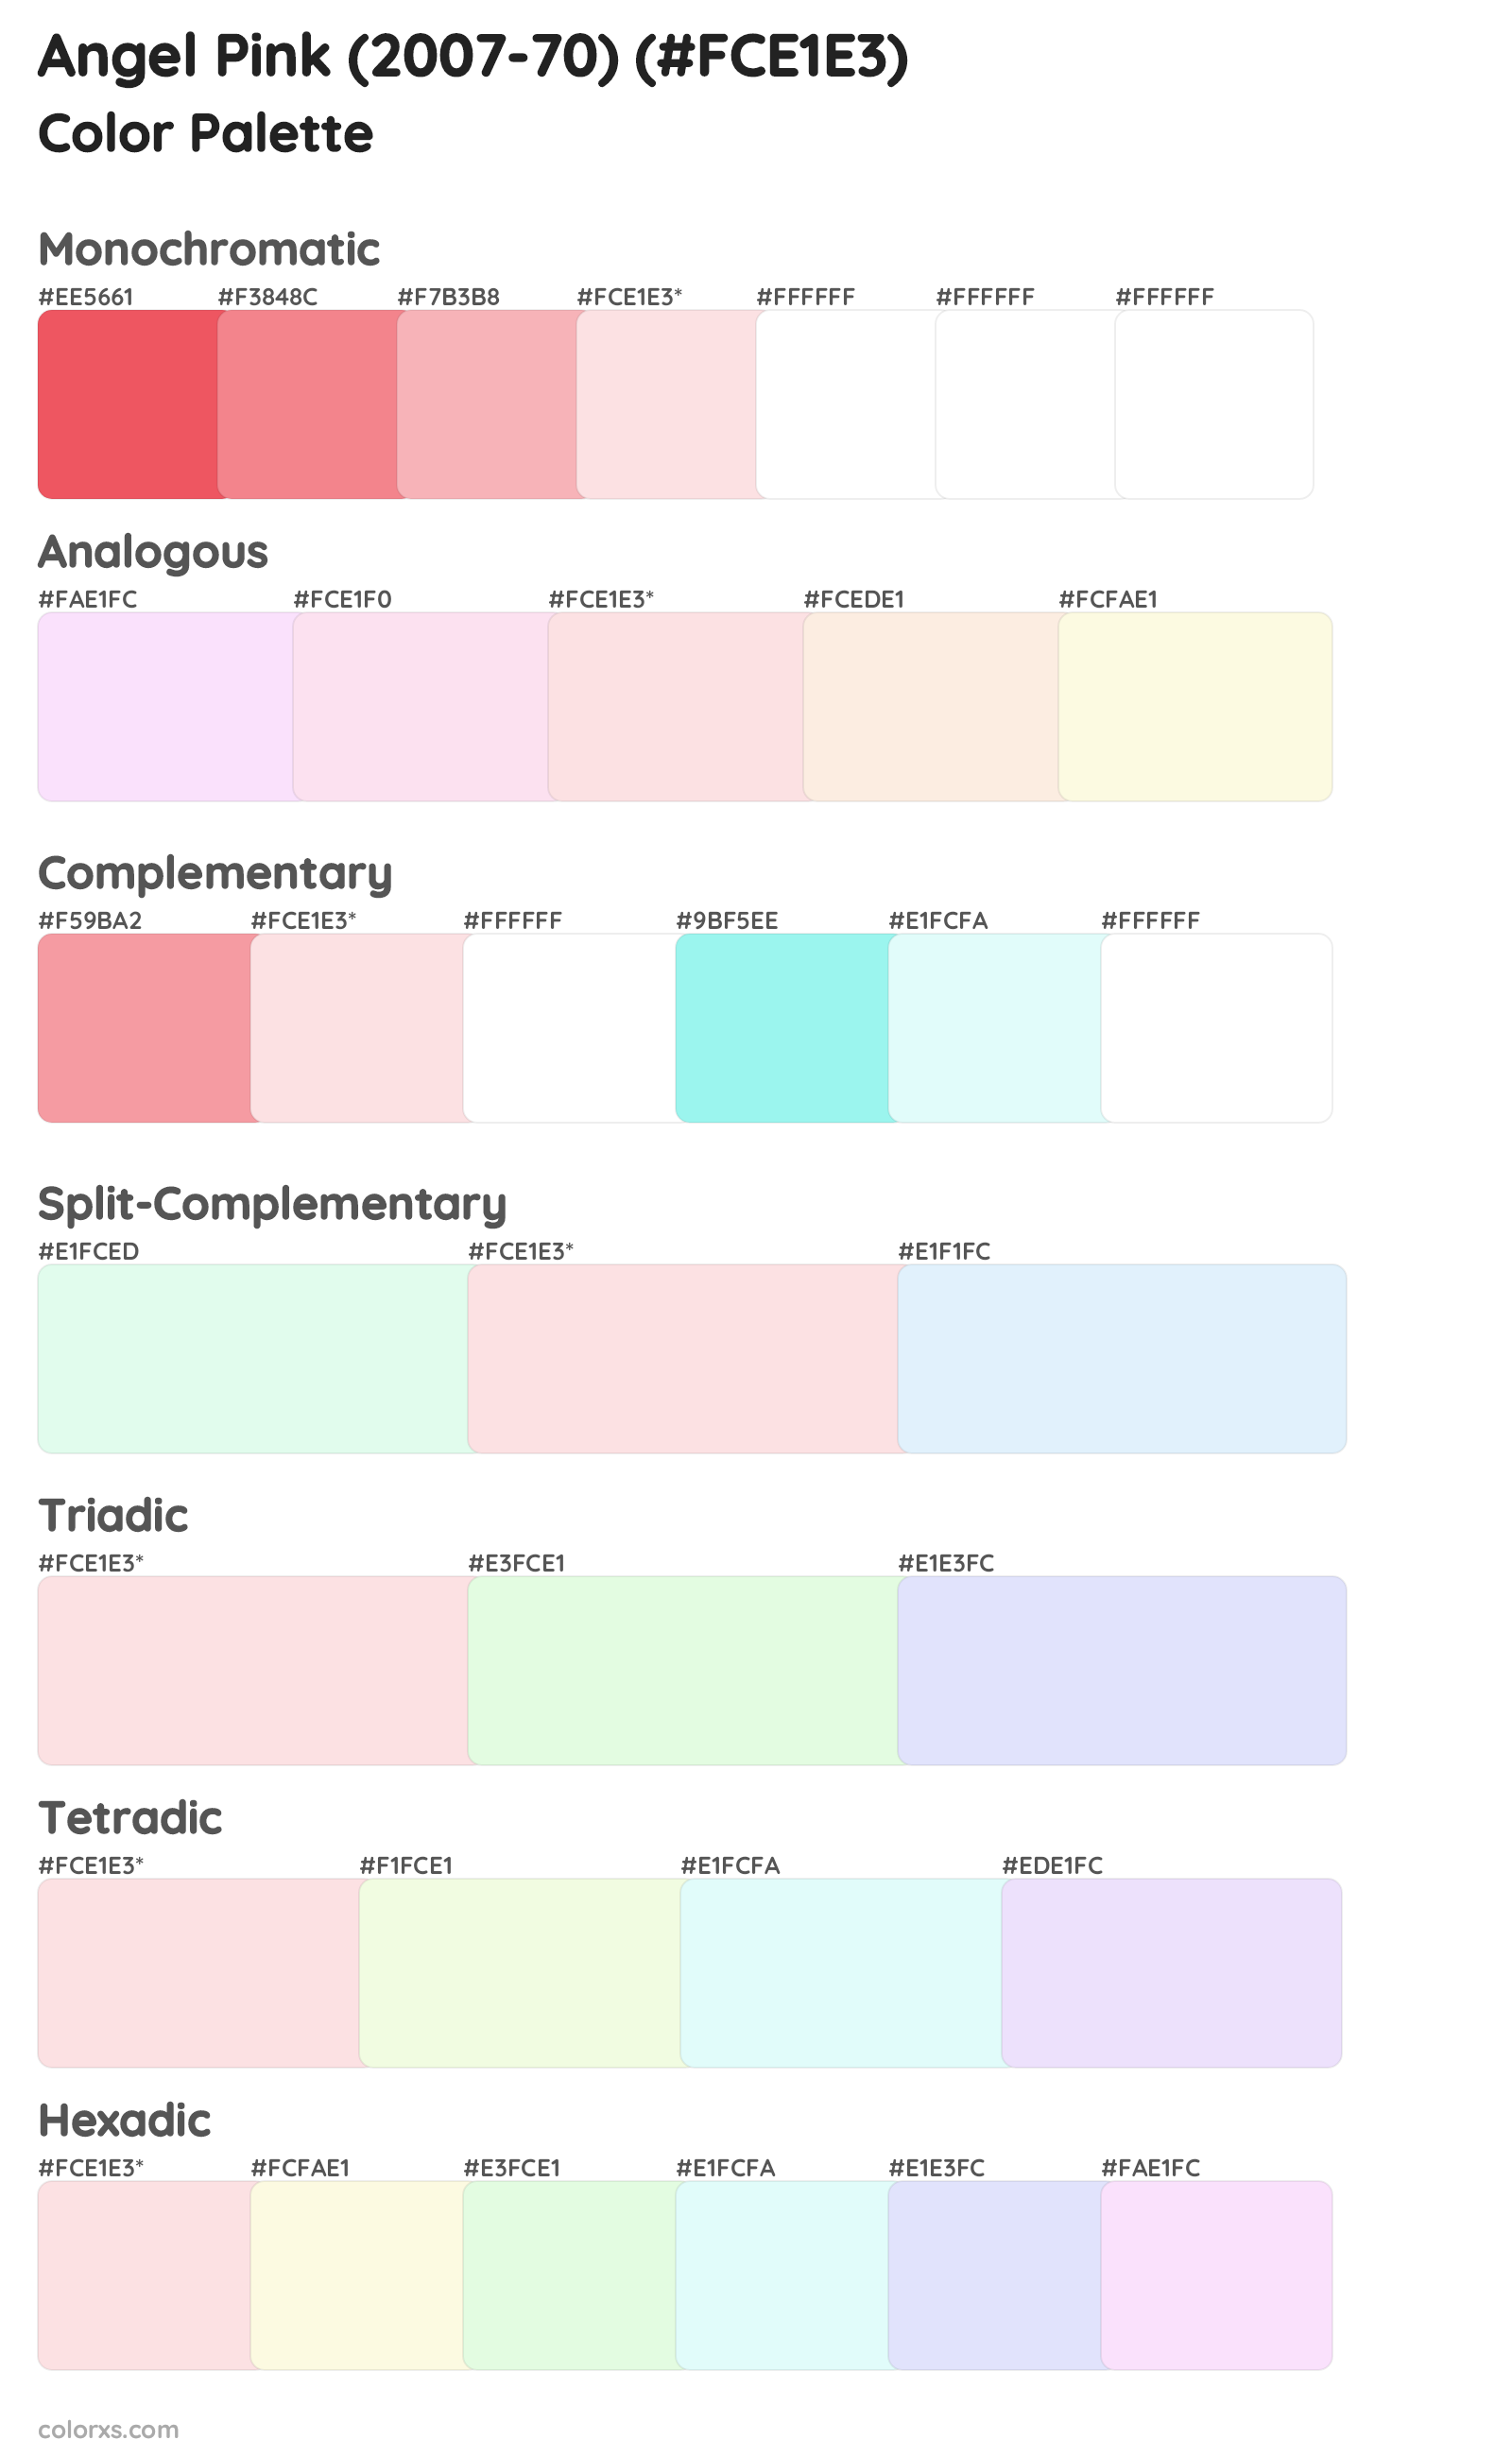 Angel Pink (2007-70) Color Scheme Palettes